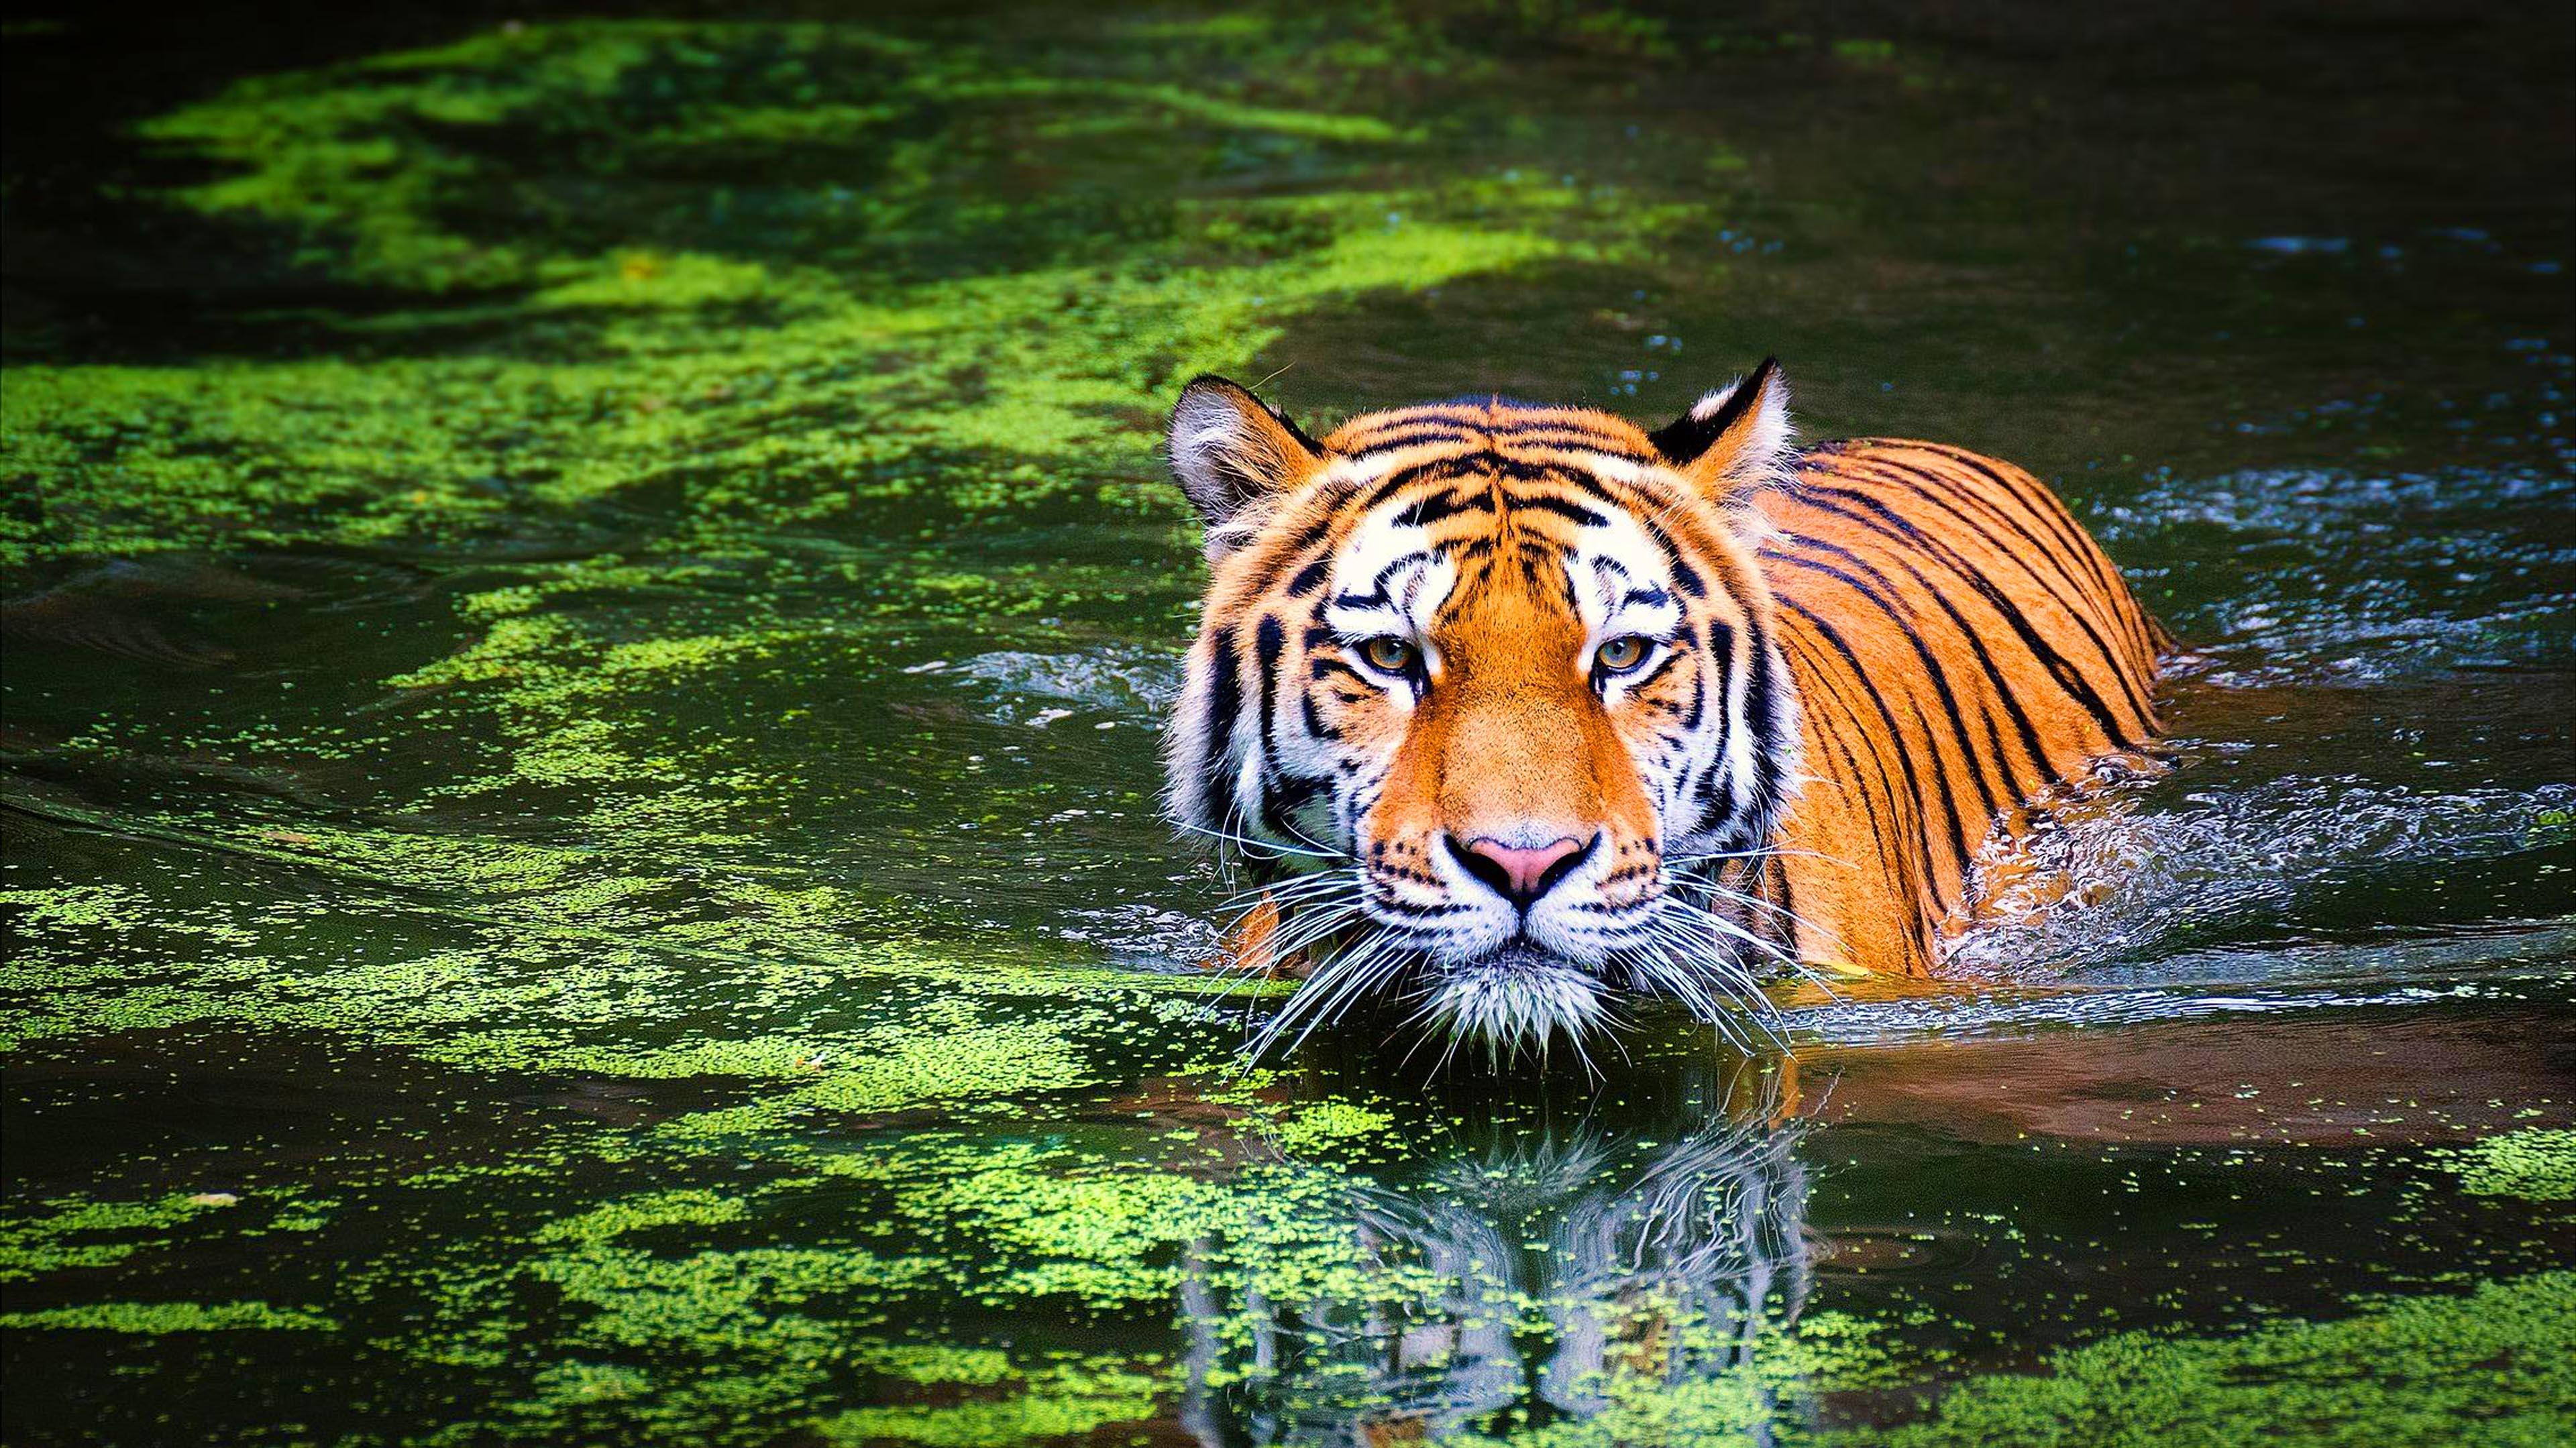 Animal Bengal Tiger Swimming 4k Ultra Hd Wallpaper For Desktop